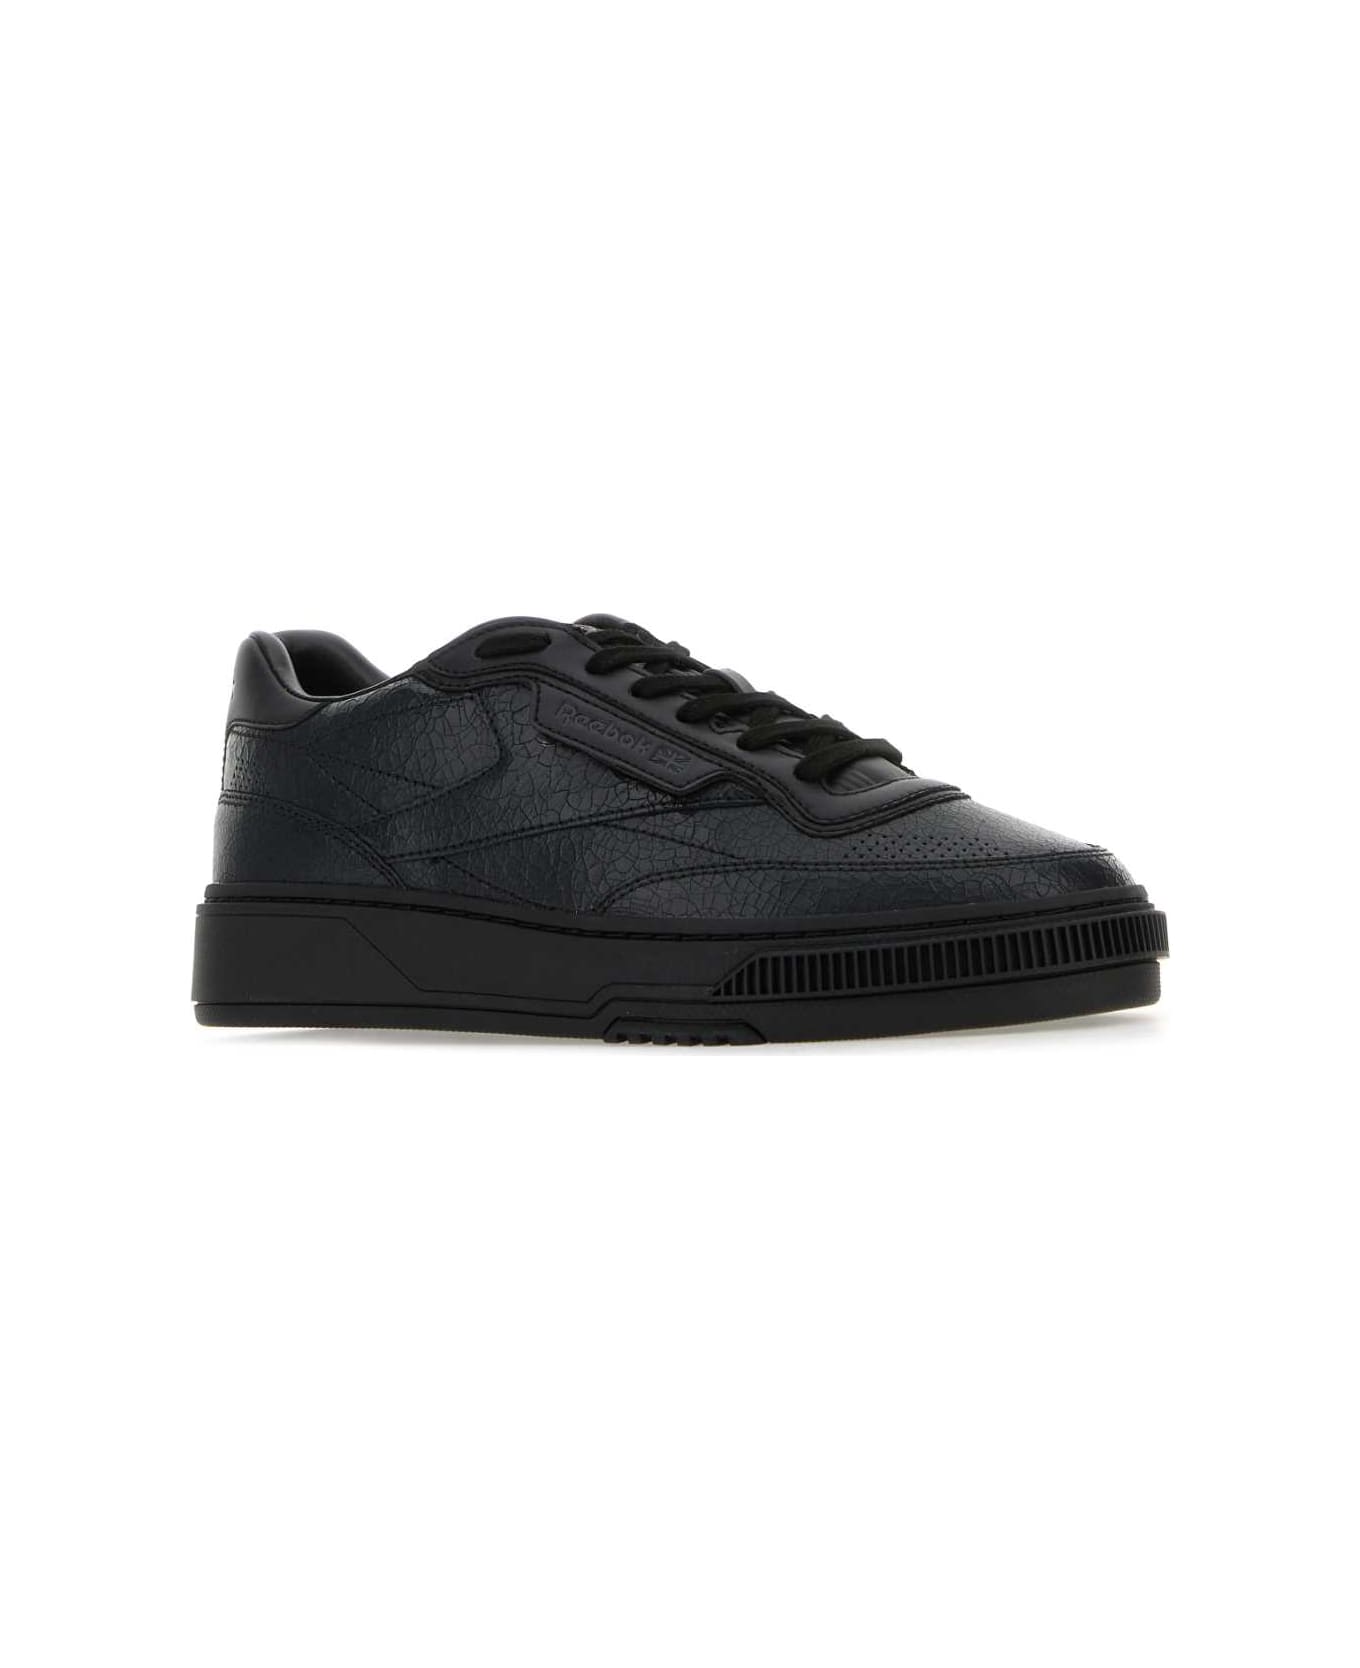 Reebok Black Leather Club C Ltd Sneakers - Black